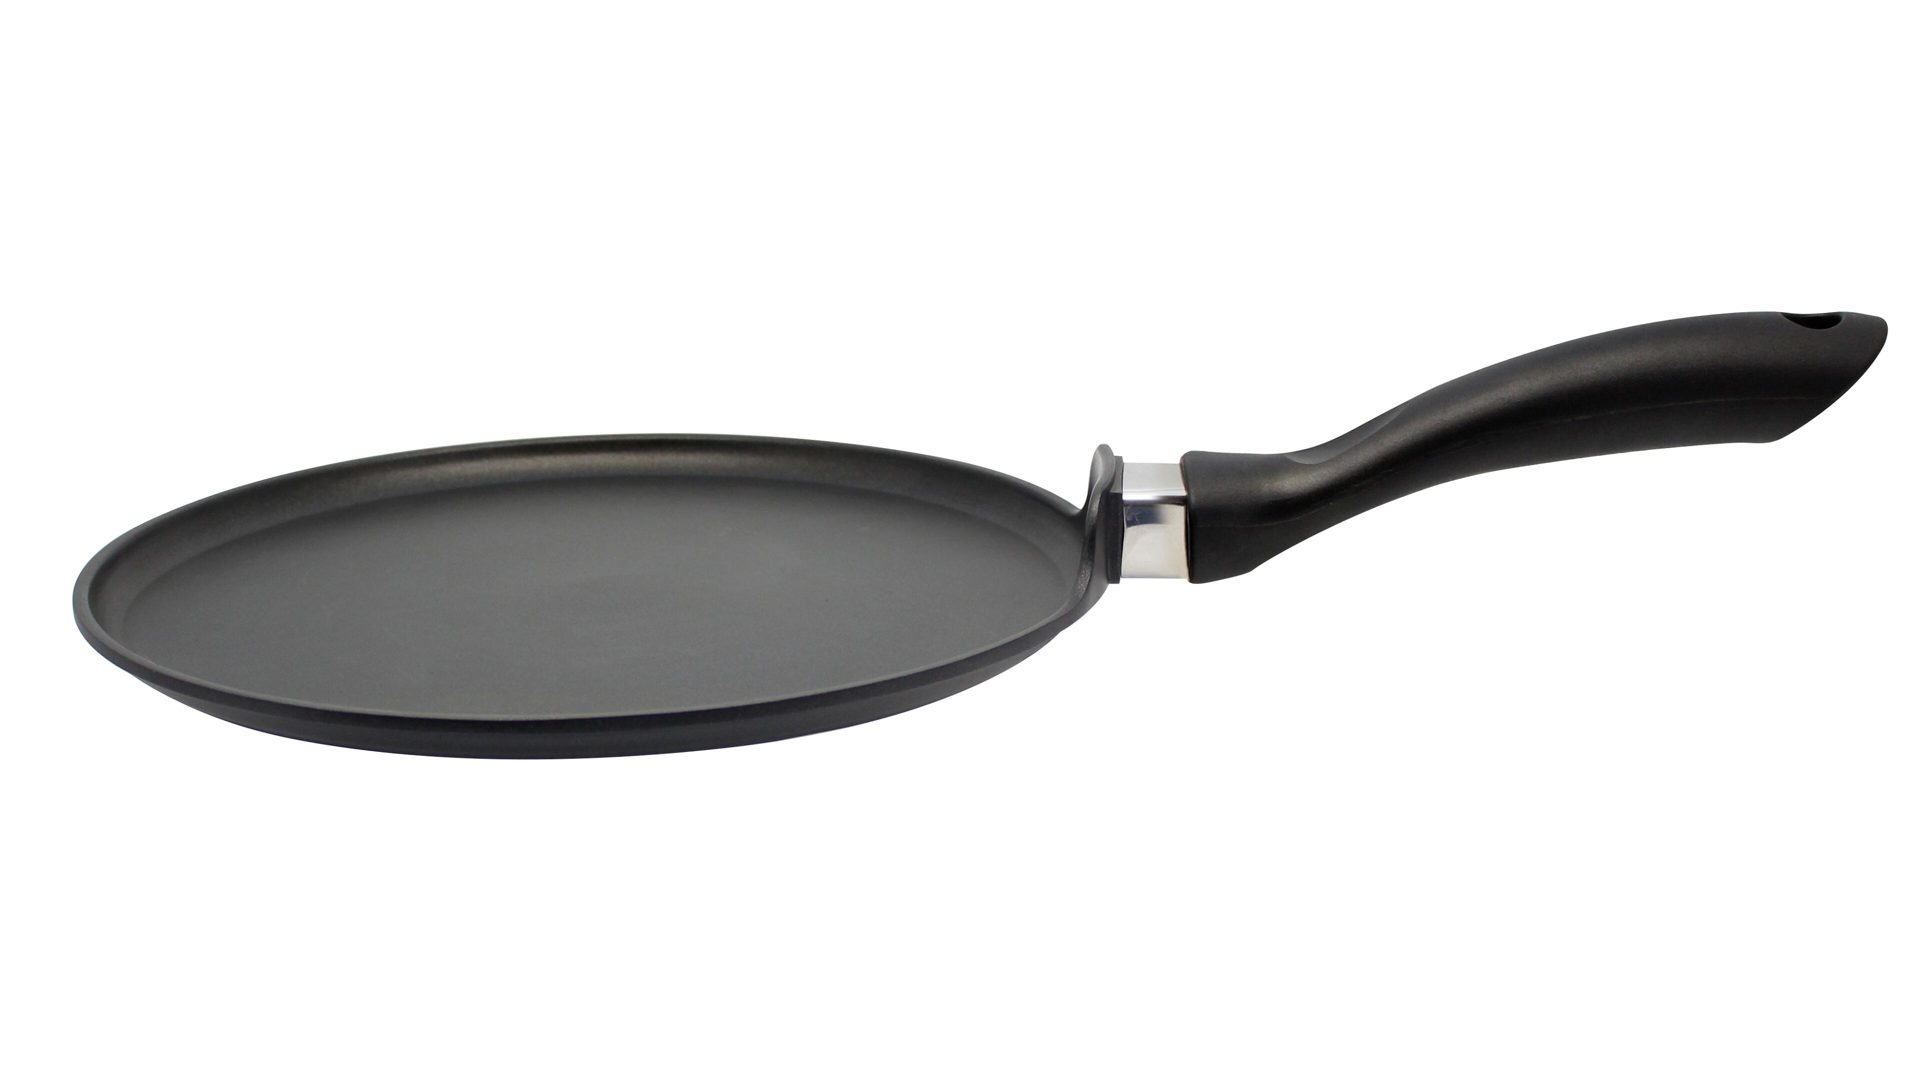 Pfanne Elo aus Metall in Schwarz ELO® Crepes-Pfanne Alucast Aluguss – Durchmesser ca. 28 cm